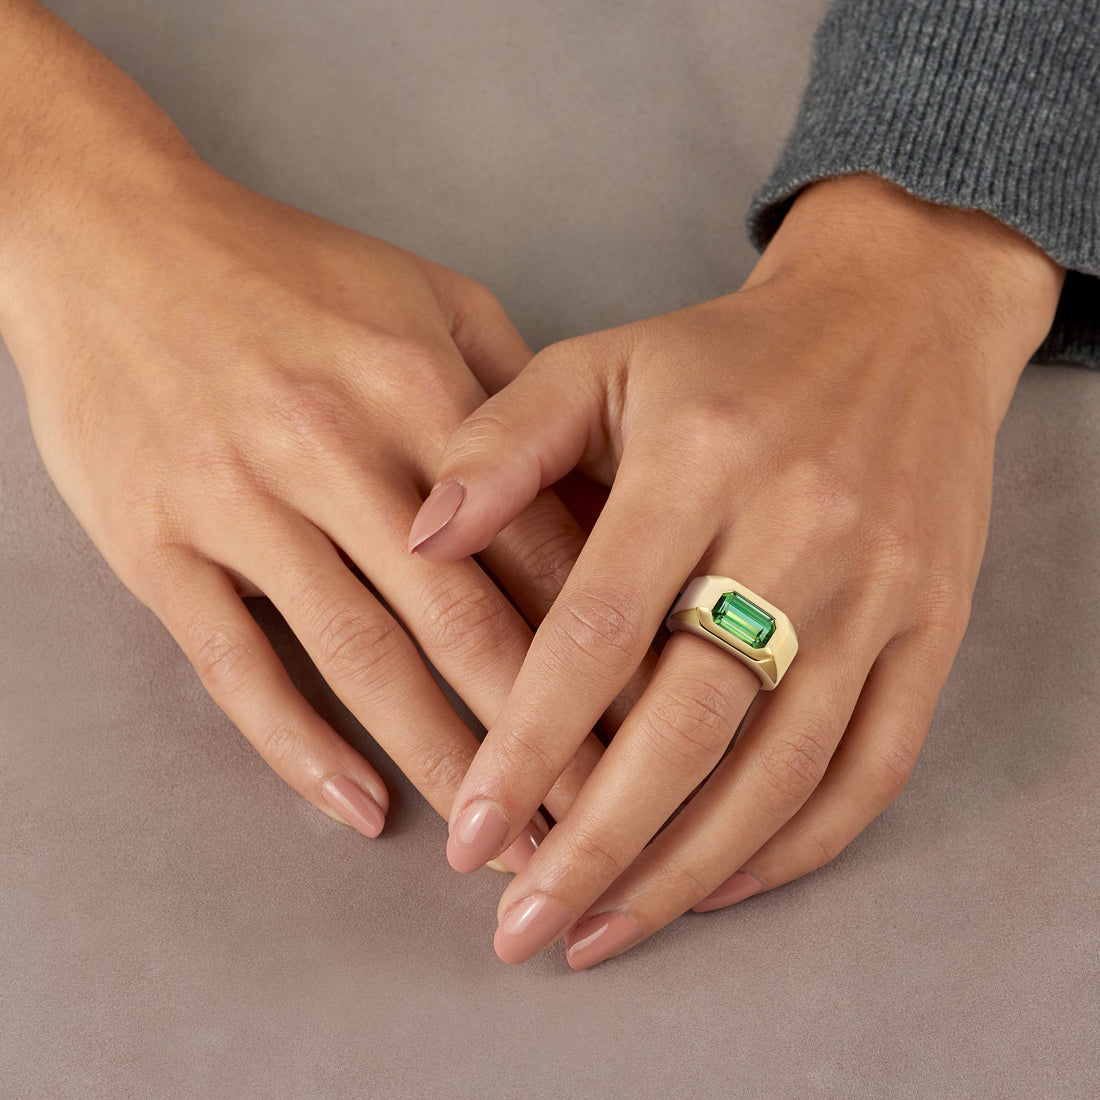  Green Tourmaline Berlin Ring by Minka Jewels | The Cut London